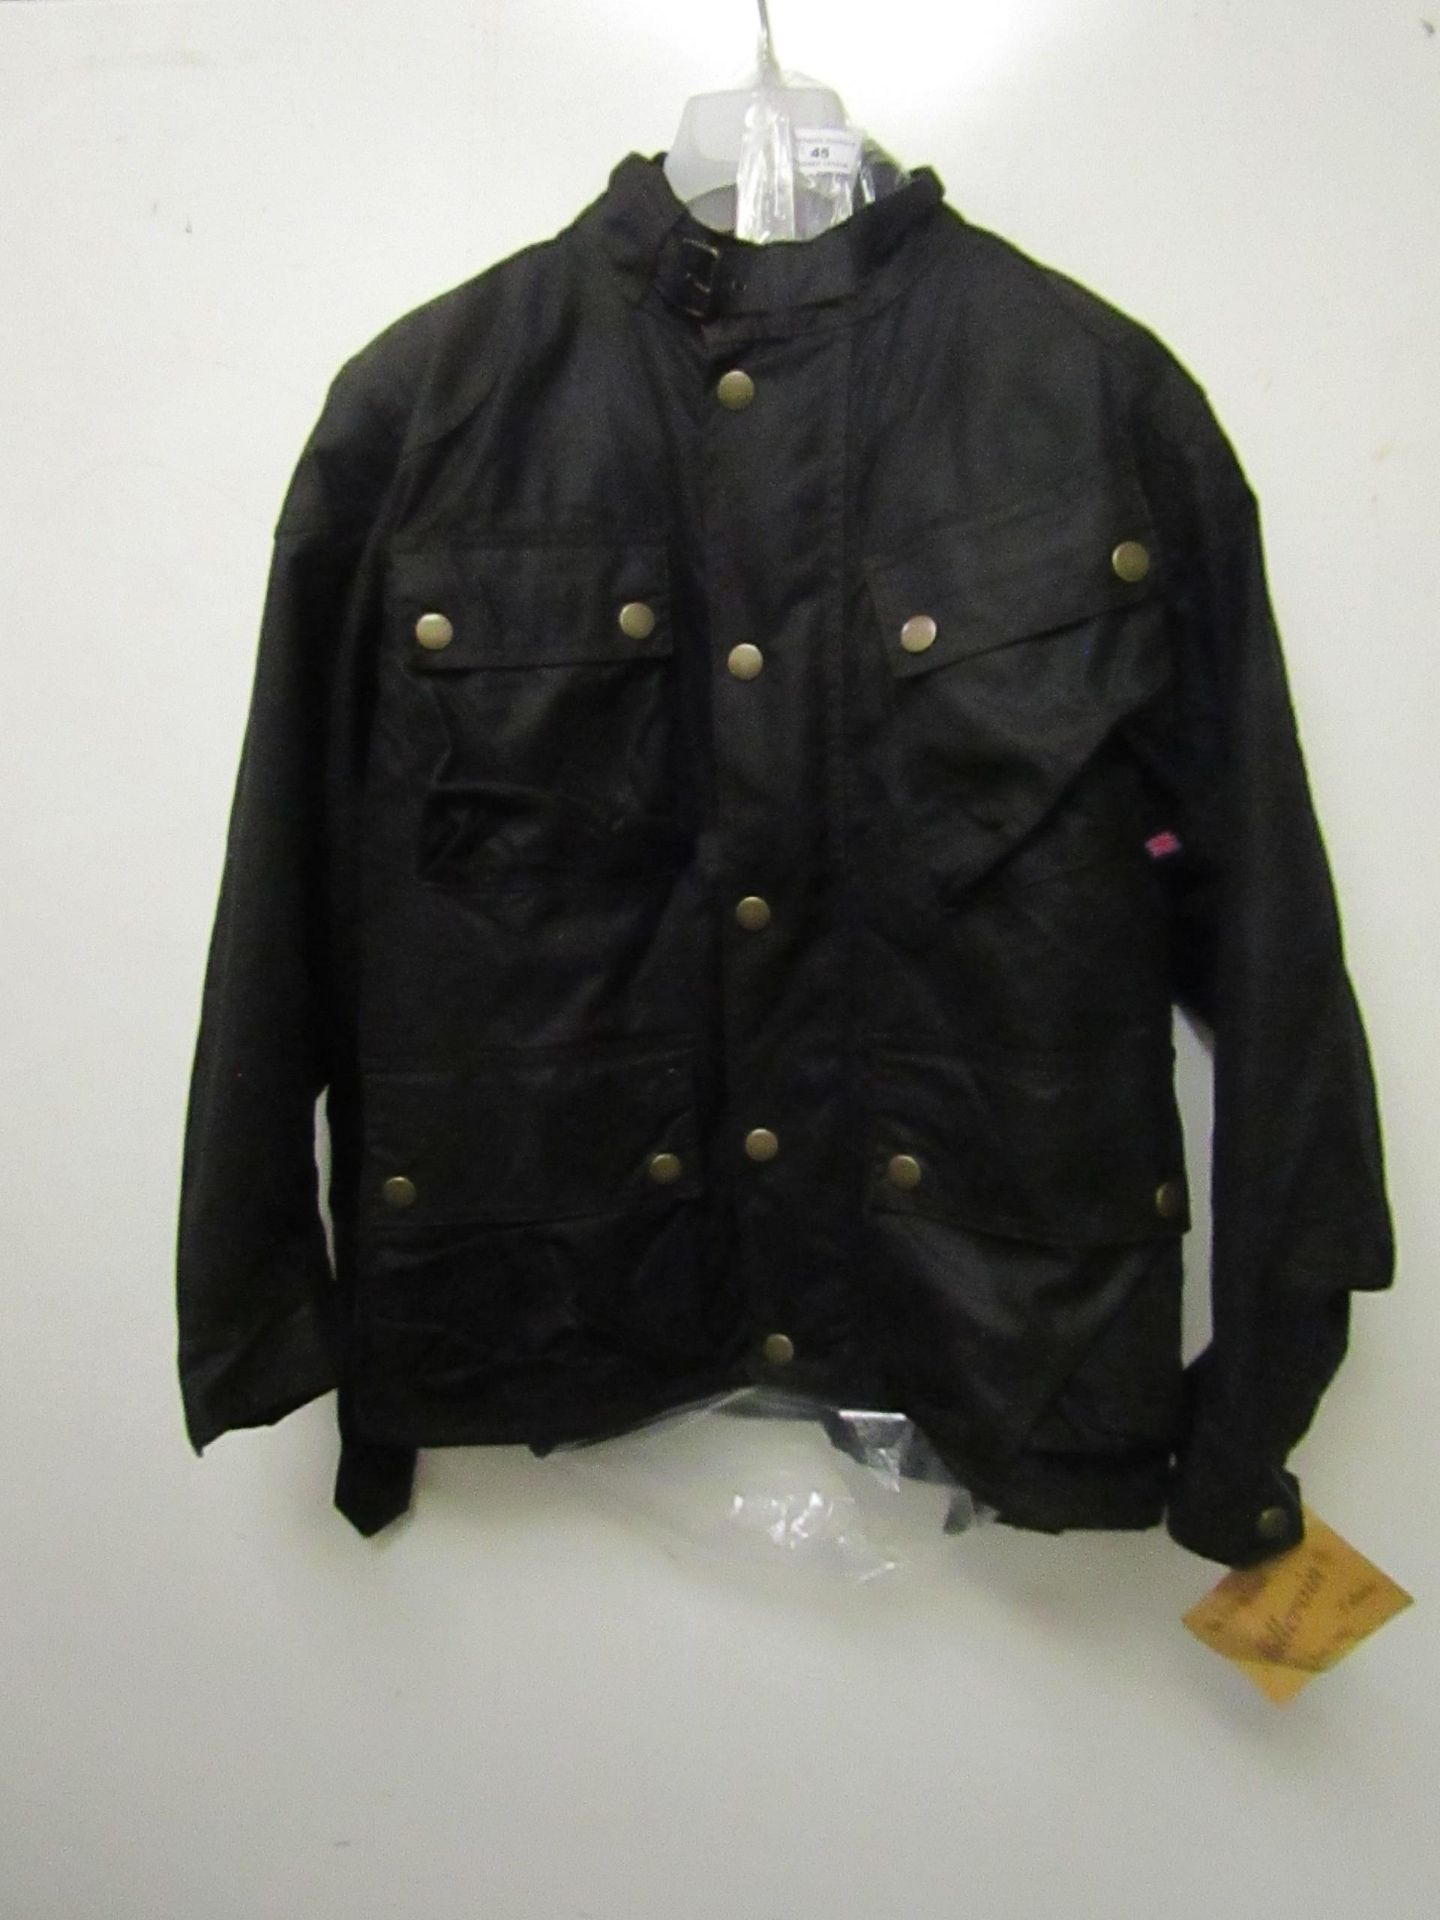 Belstaff "Black Prince" Original Trialmaster jacket, size 40, with tags,